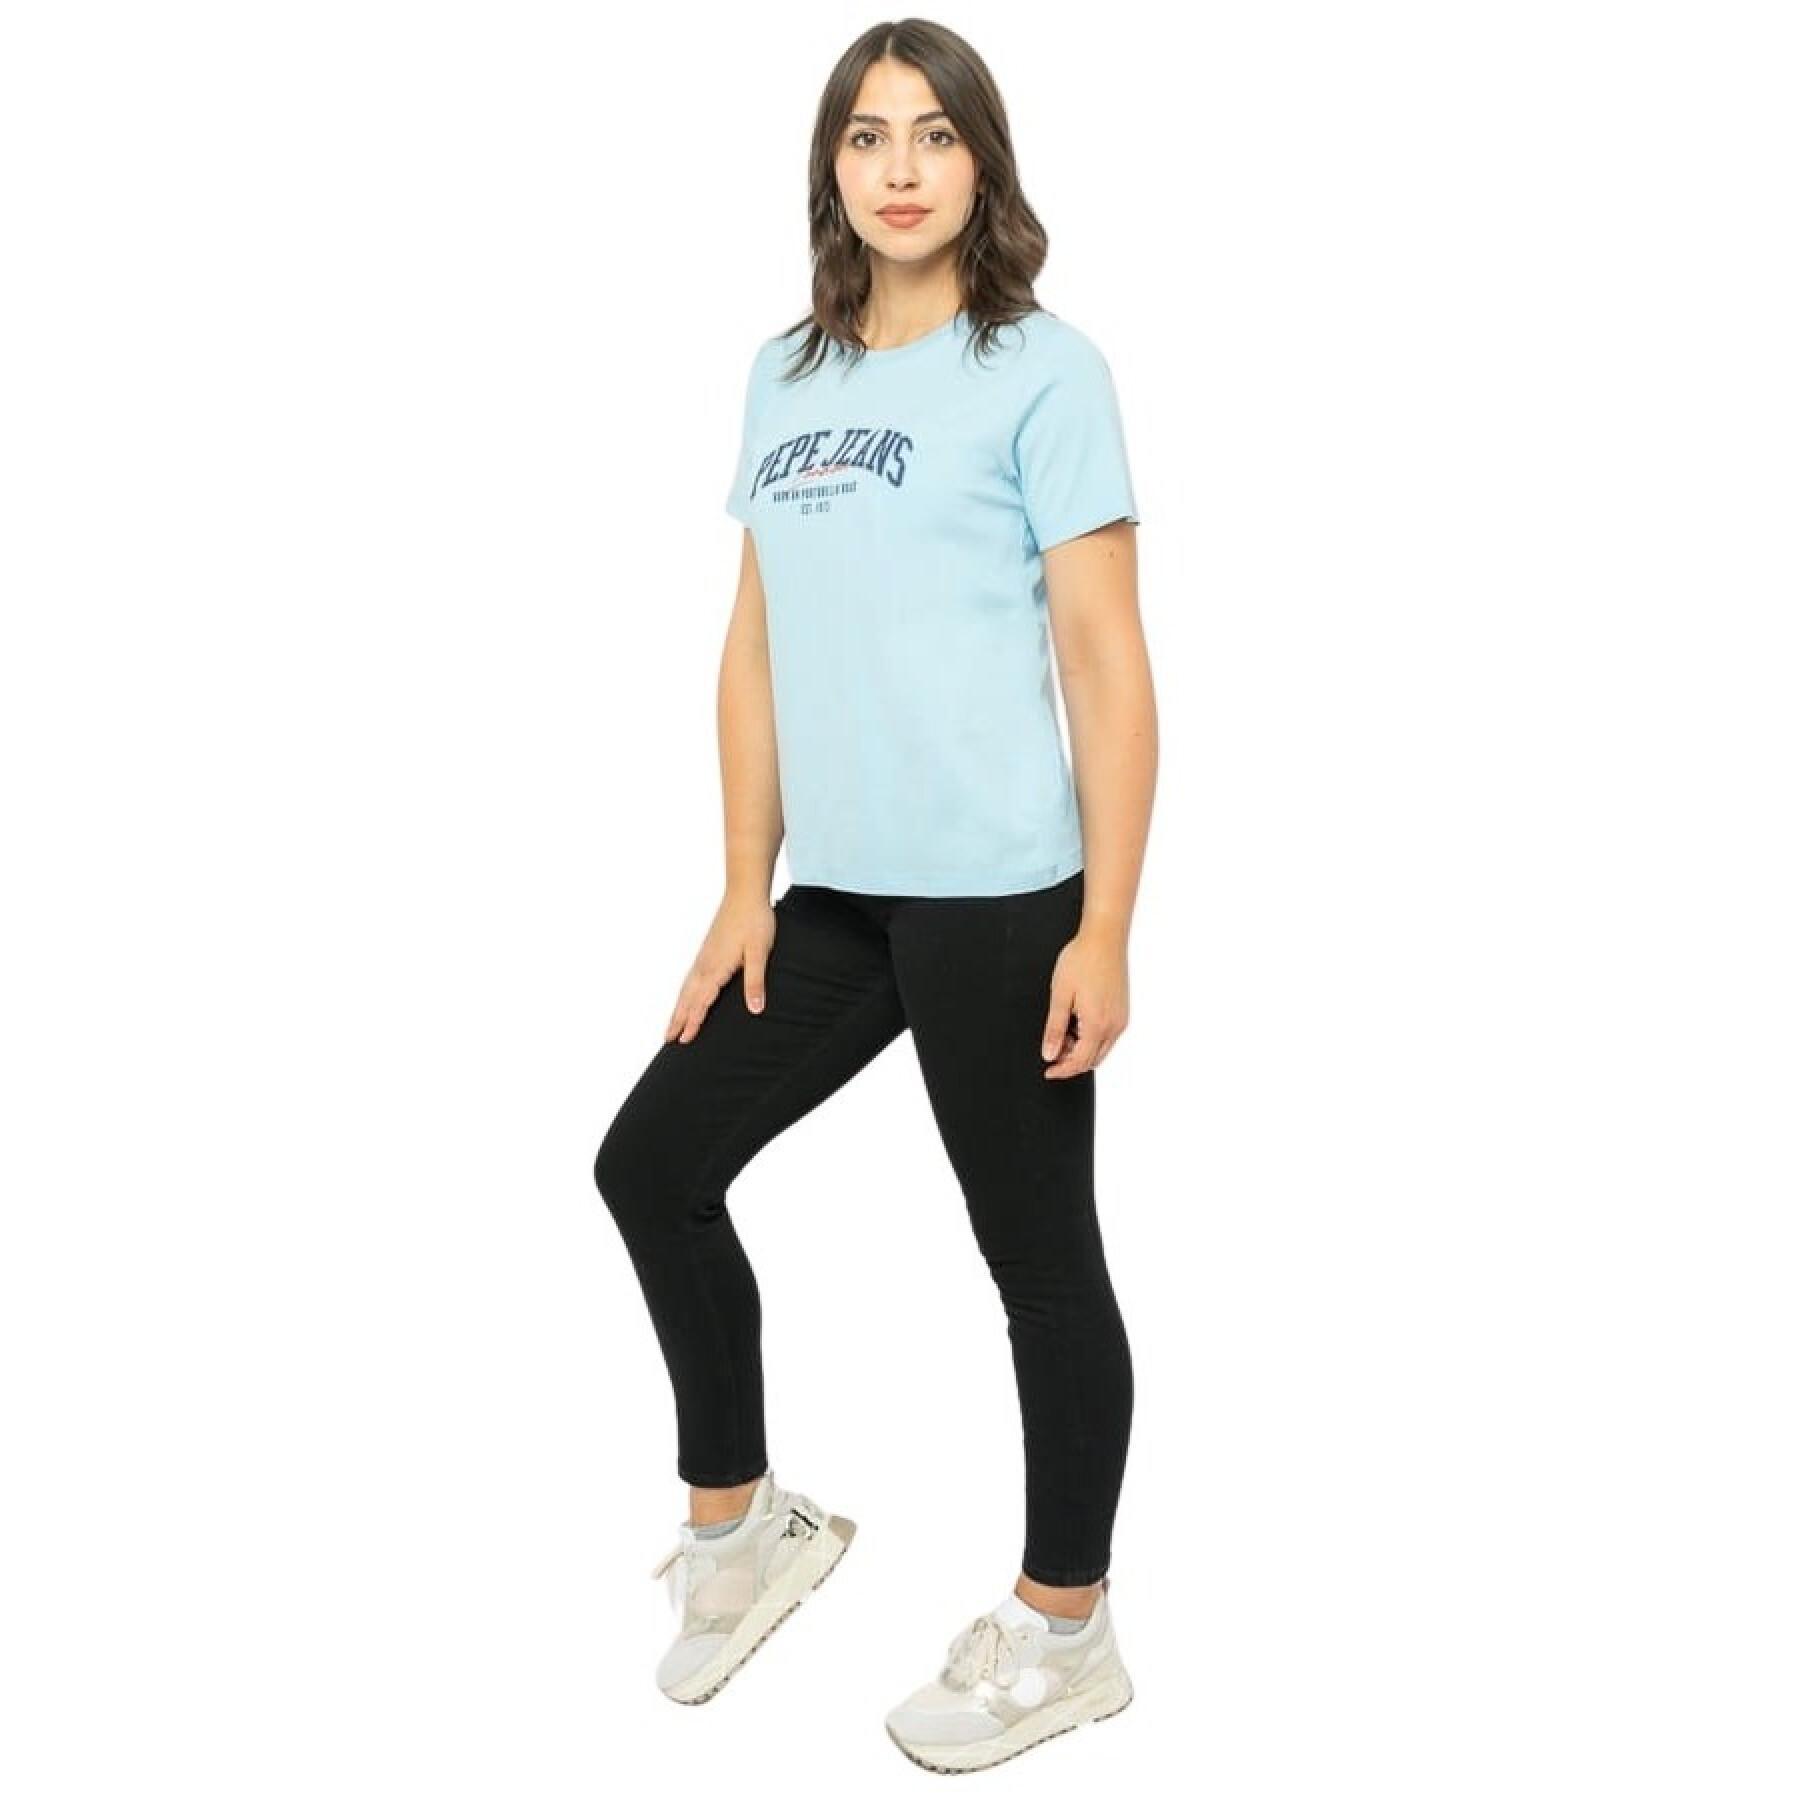 Women's T-shirt Pepe Jeans Kate Ro - T-shirts & Tank Tops - Clothing - Women